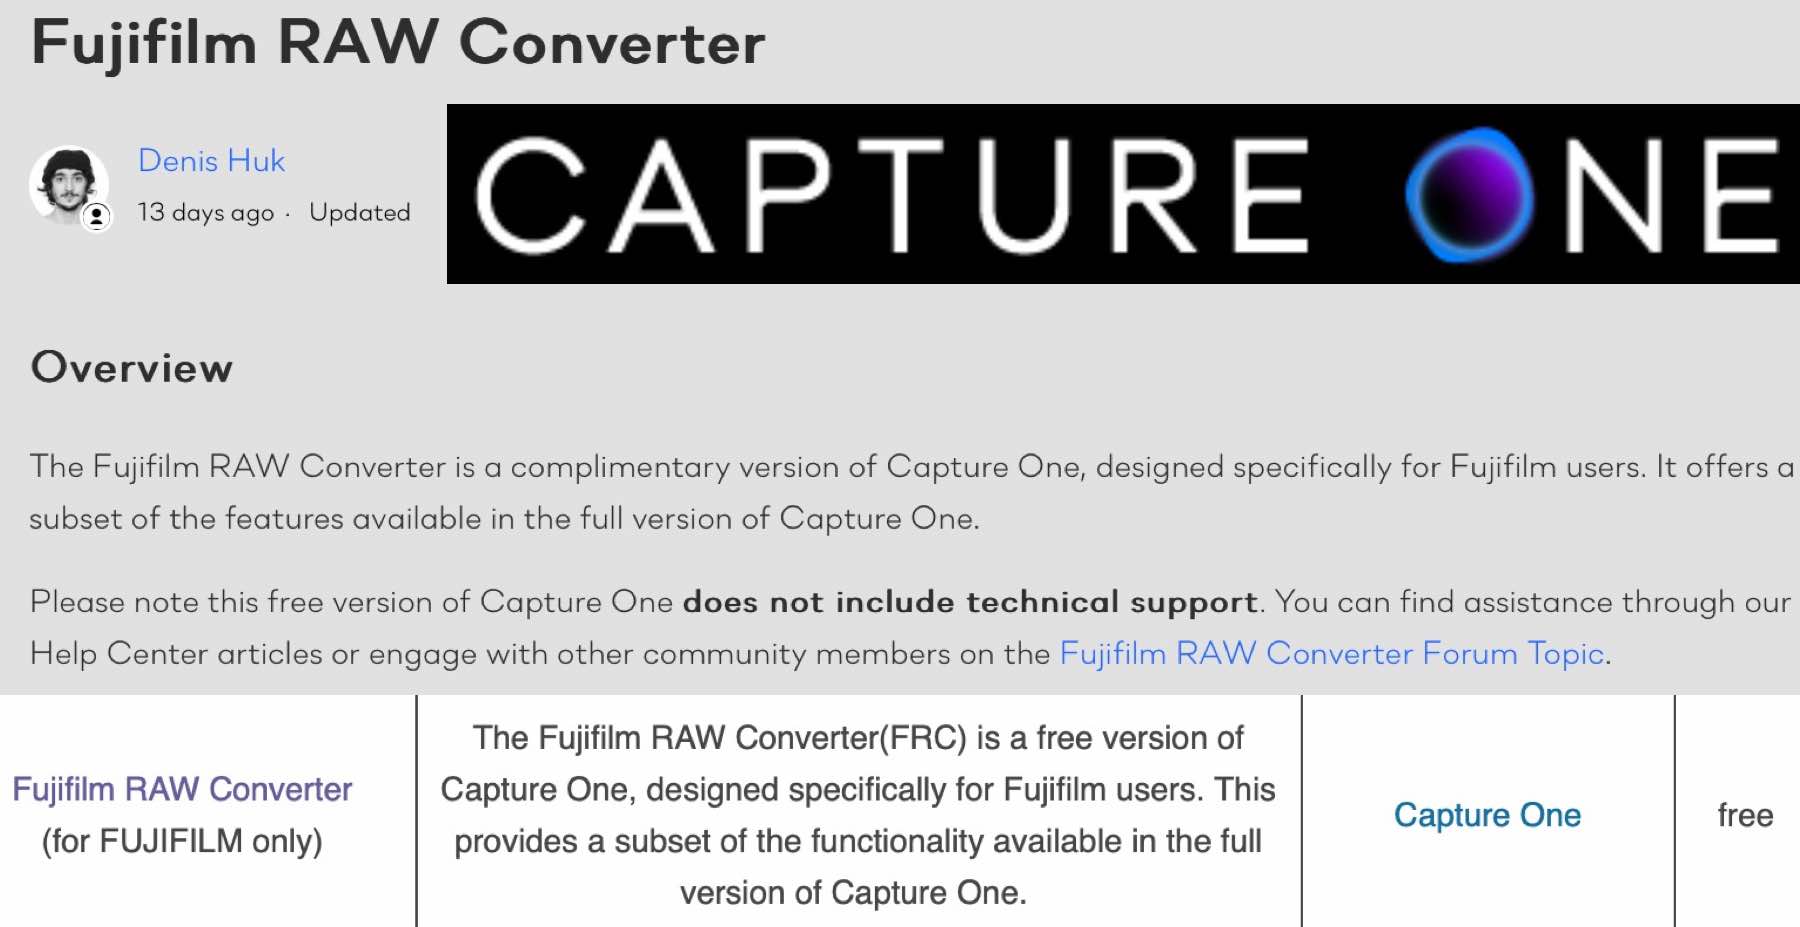 Capture One offers FREE Fujifilm RAW Converter for Fujifilm Users